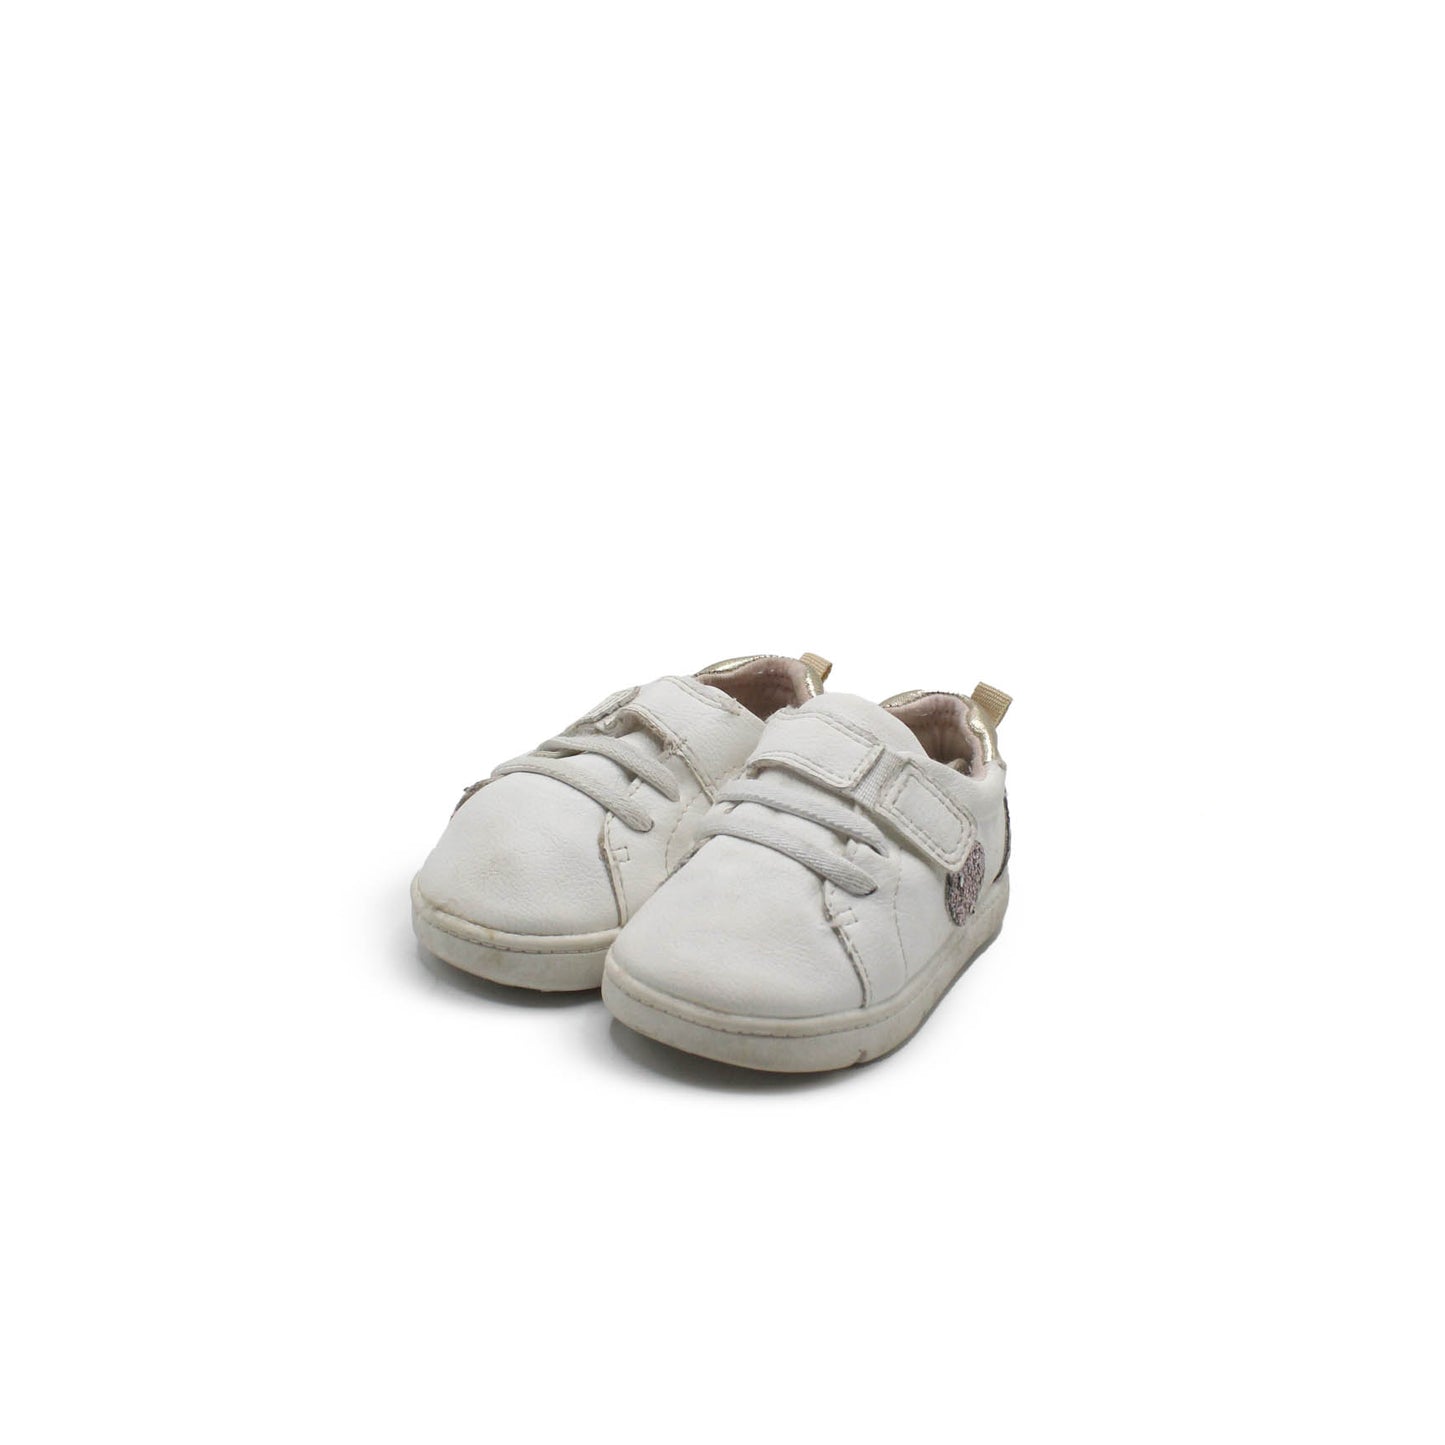 Carters Baby Girl White Shoe